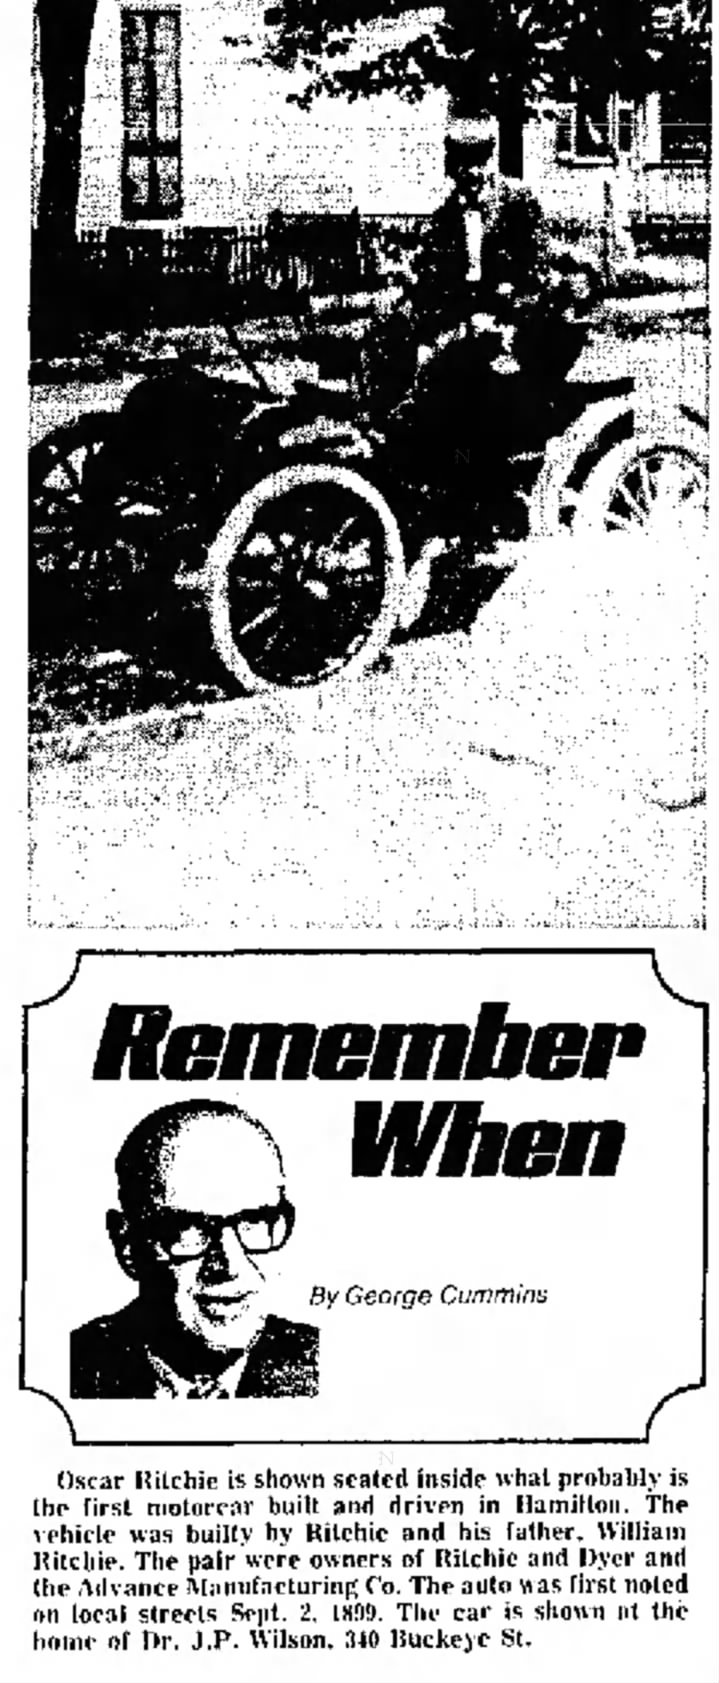 Oscar Ritchie Shown IN First Motor Car in Hamilton